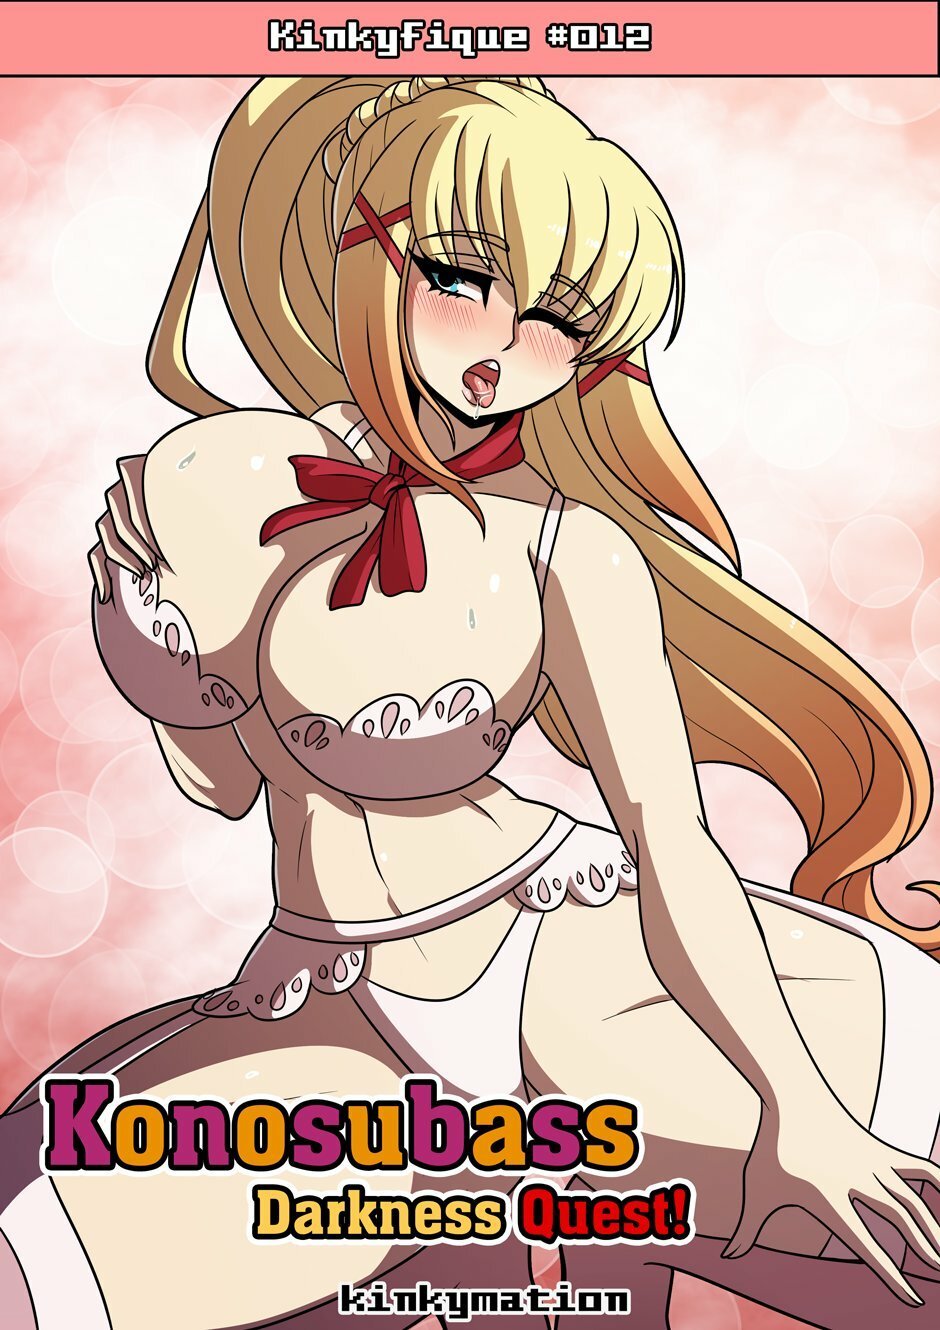 Konosubass -Quest! Completo - 17